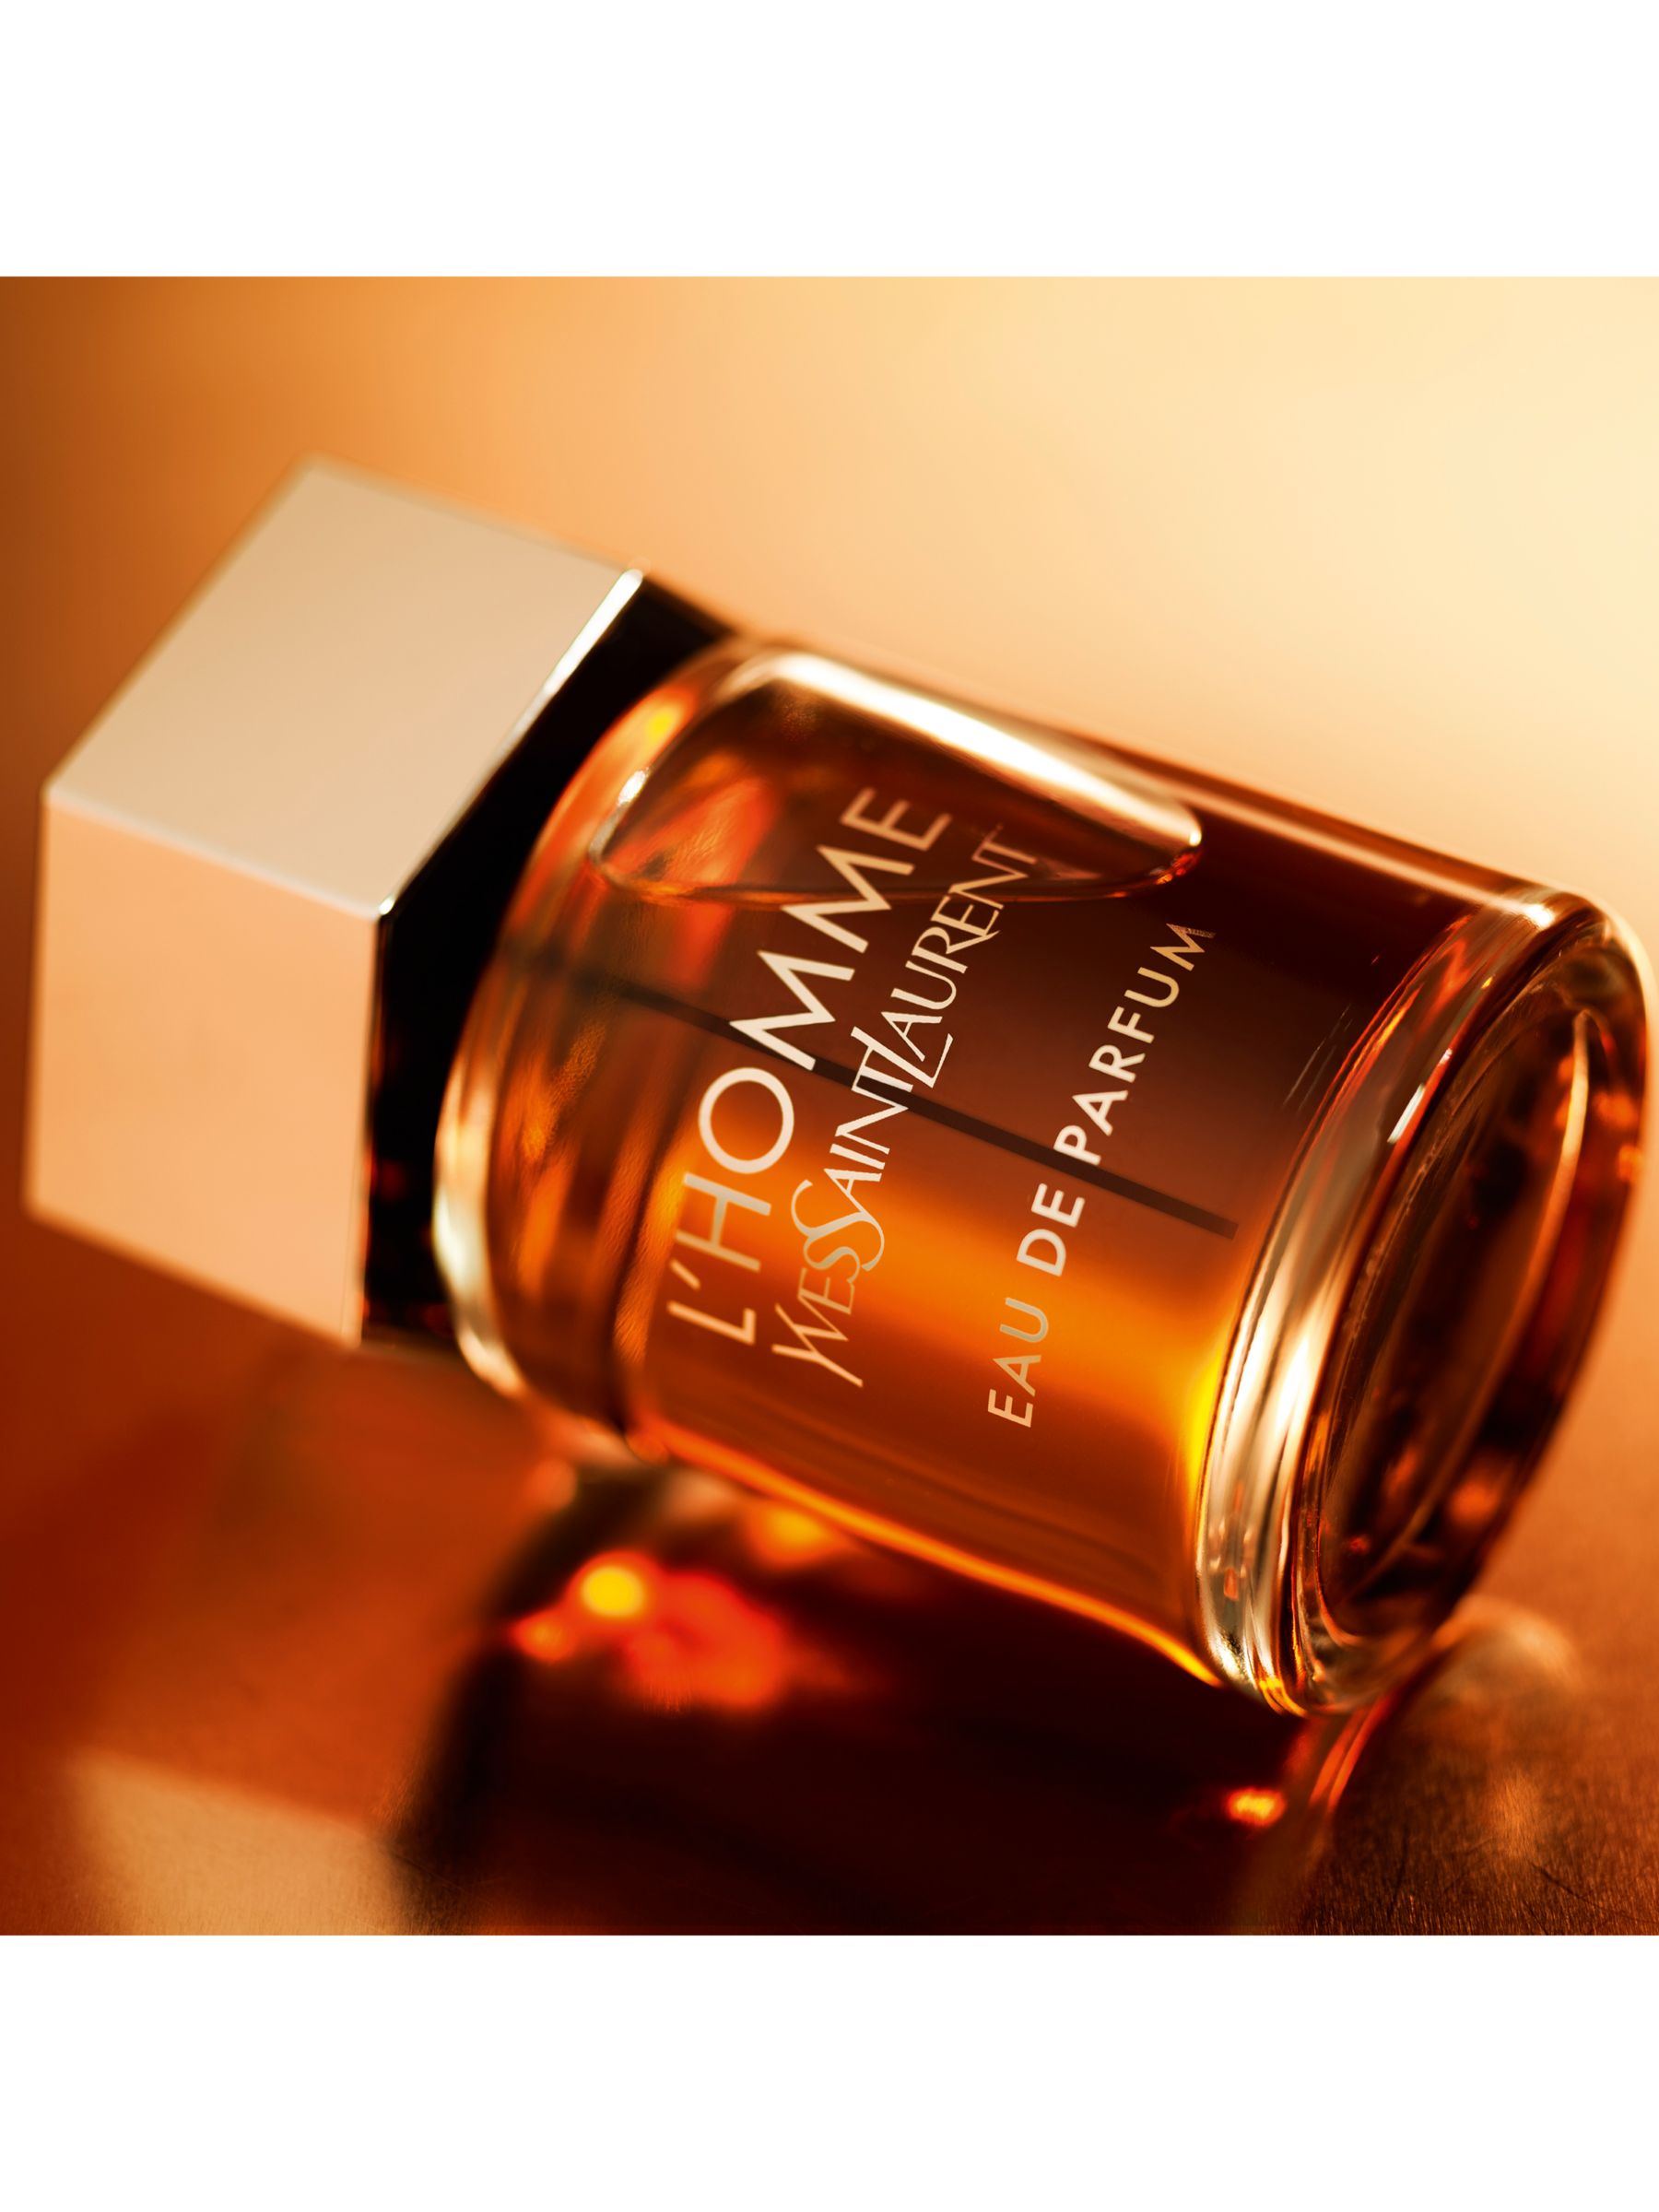 Kritisk indelukke Undtagelse Yves Saint Laurent L'Homme Eau de Parfum, 60ml at John Lewis & Partners